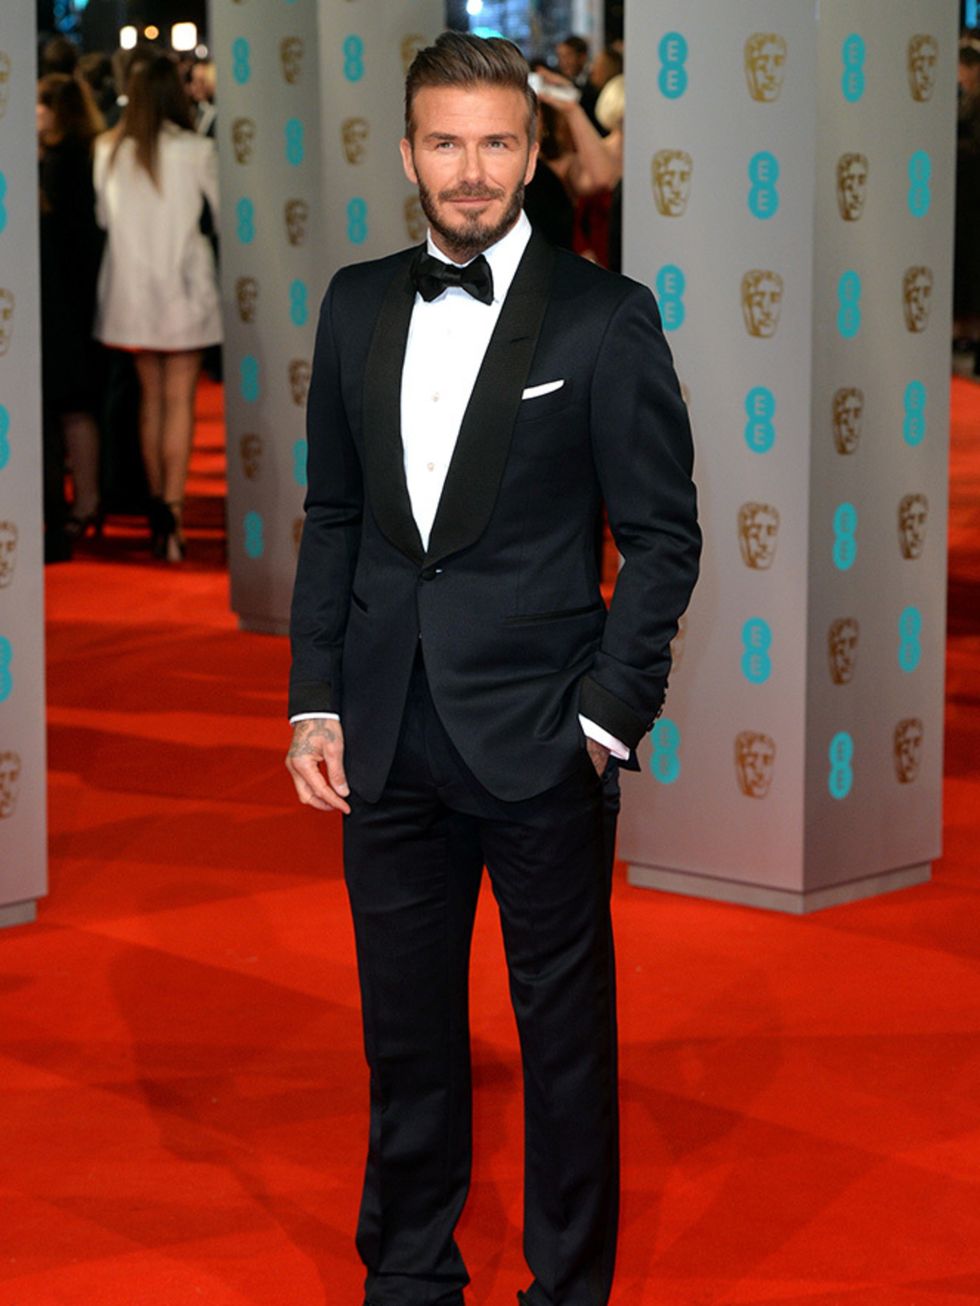 David Beckham at the British Academy Film Awards in London, February 2015.